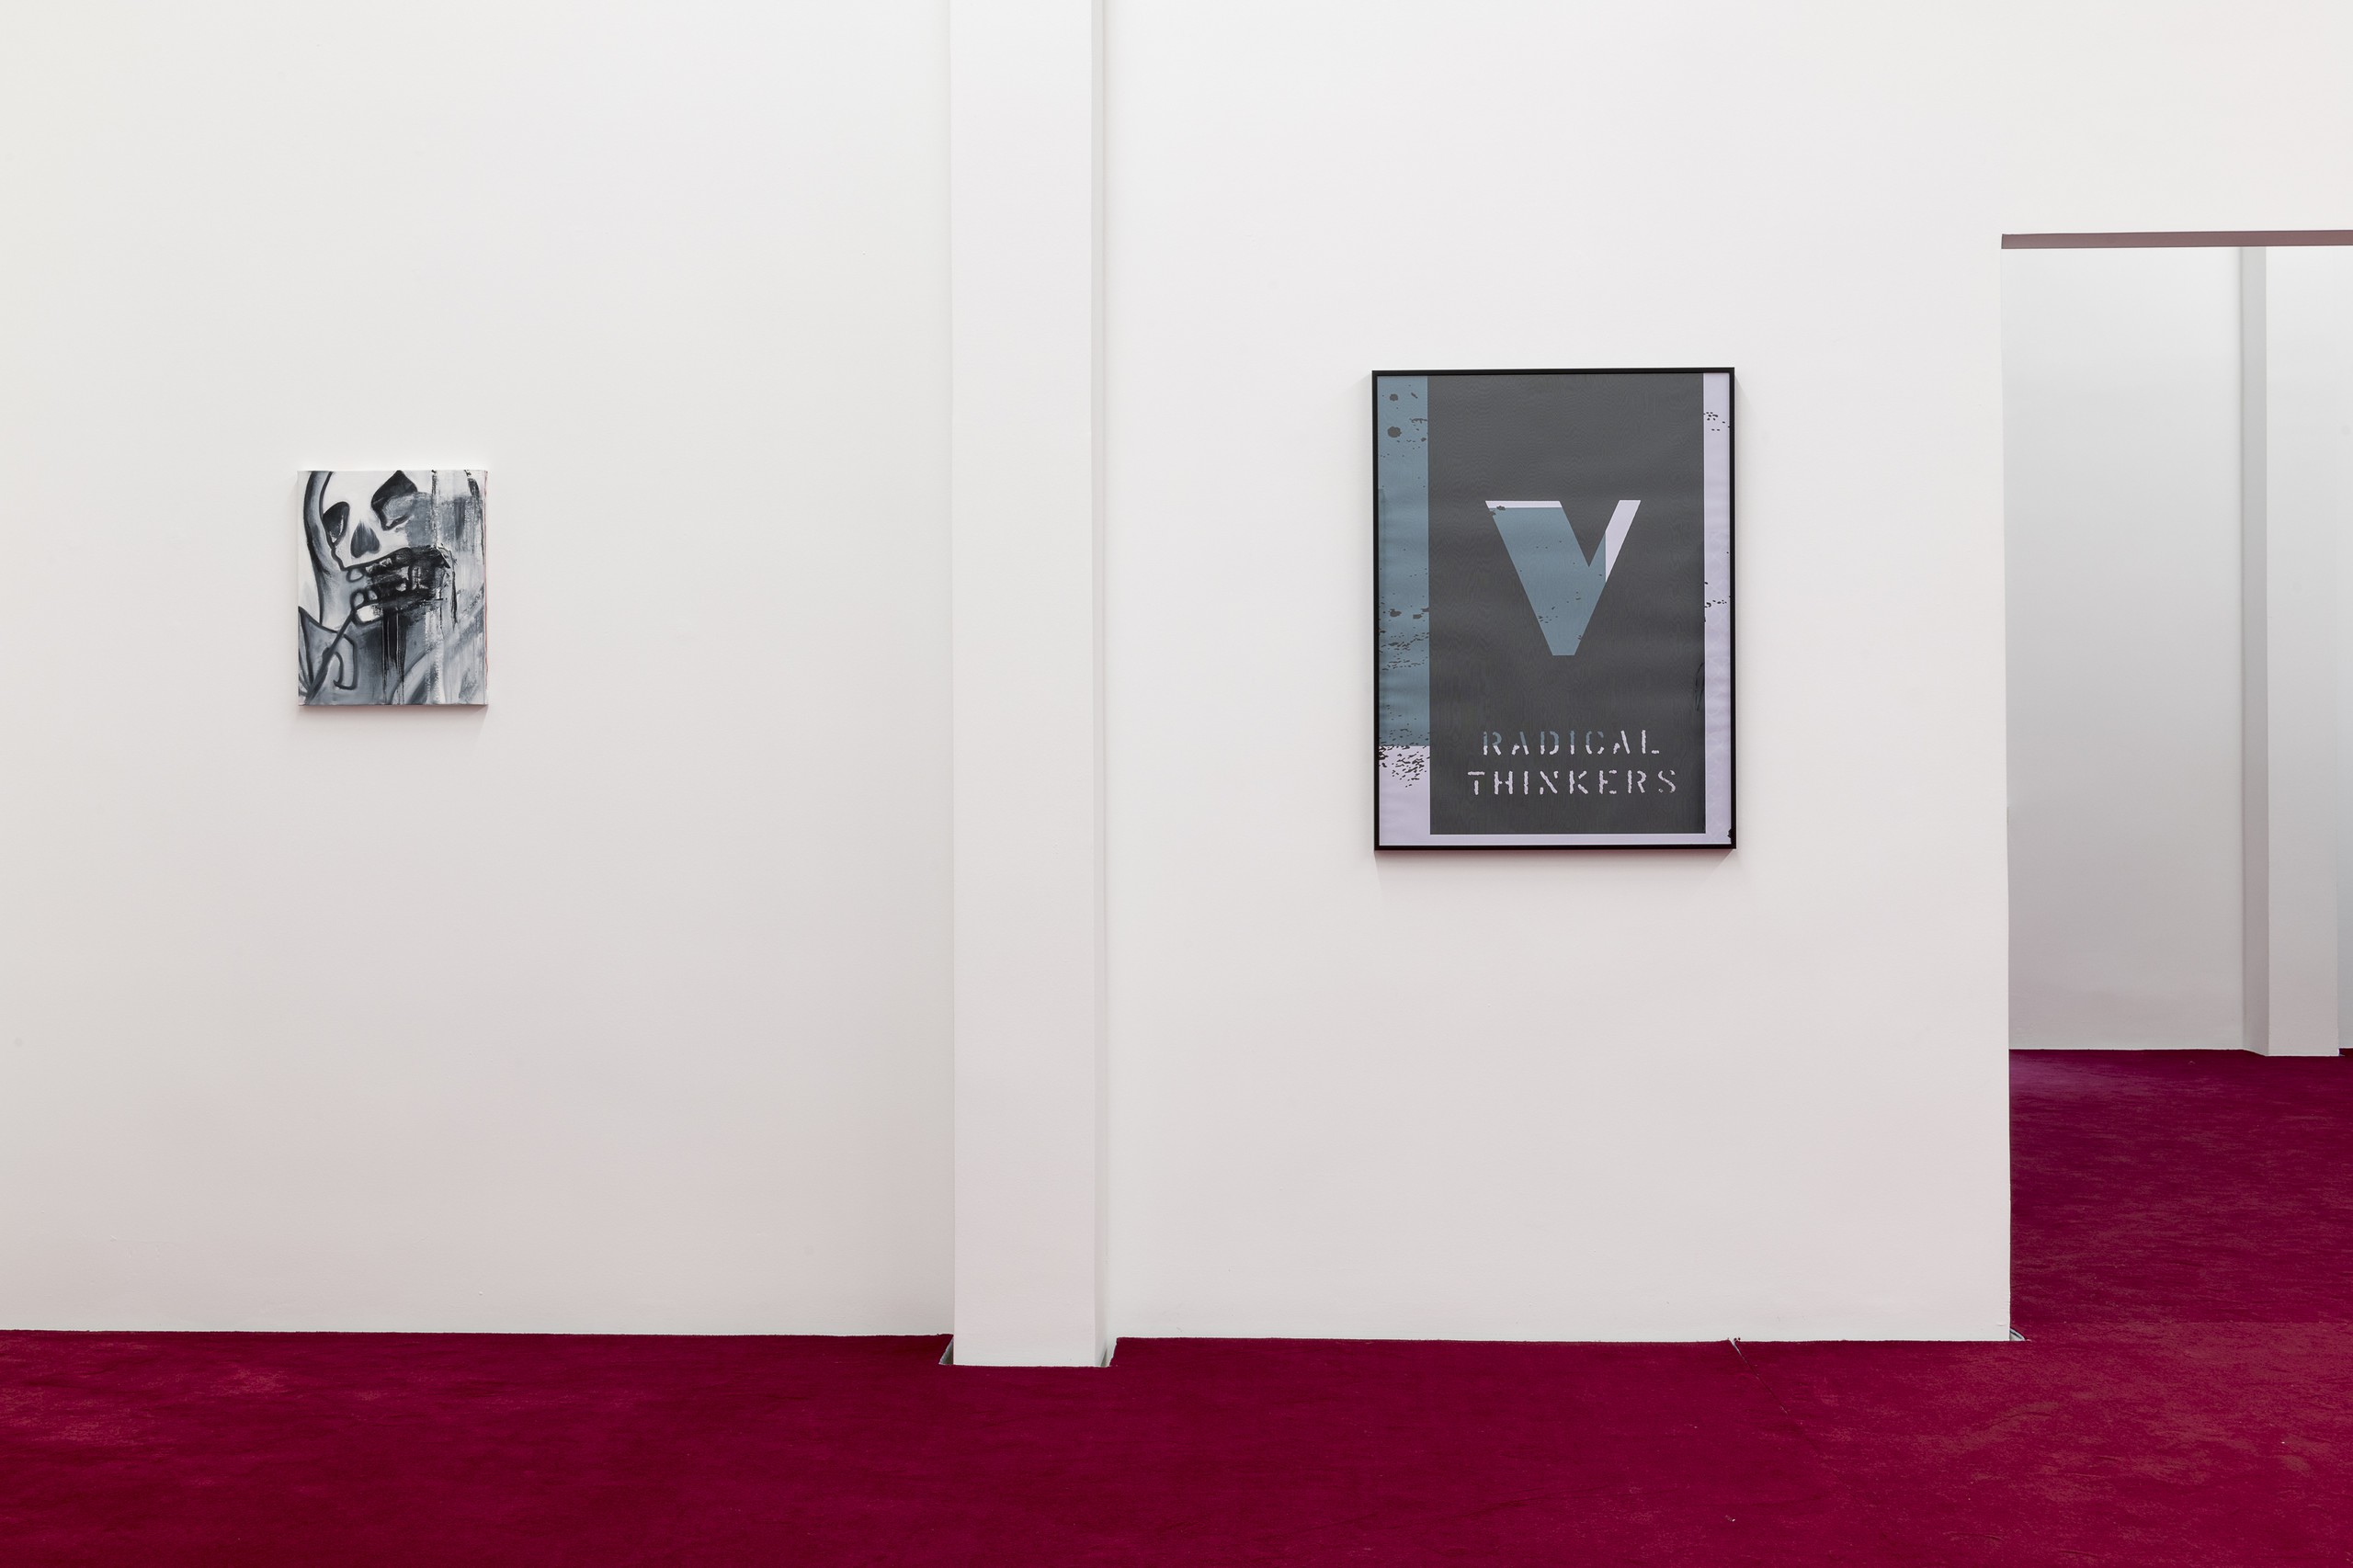 Installation view, Vitalist Economy of Painting, Galerie Neu, Berlin, 2018